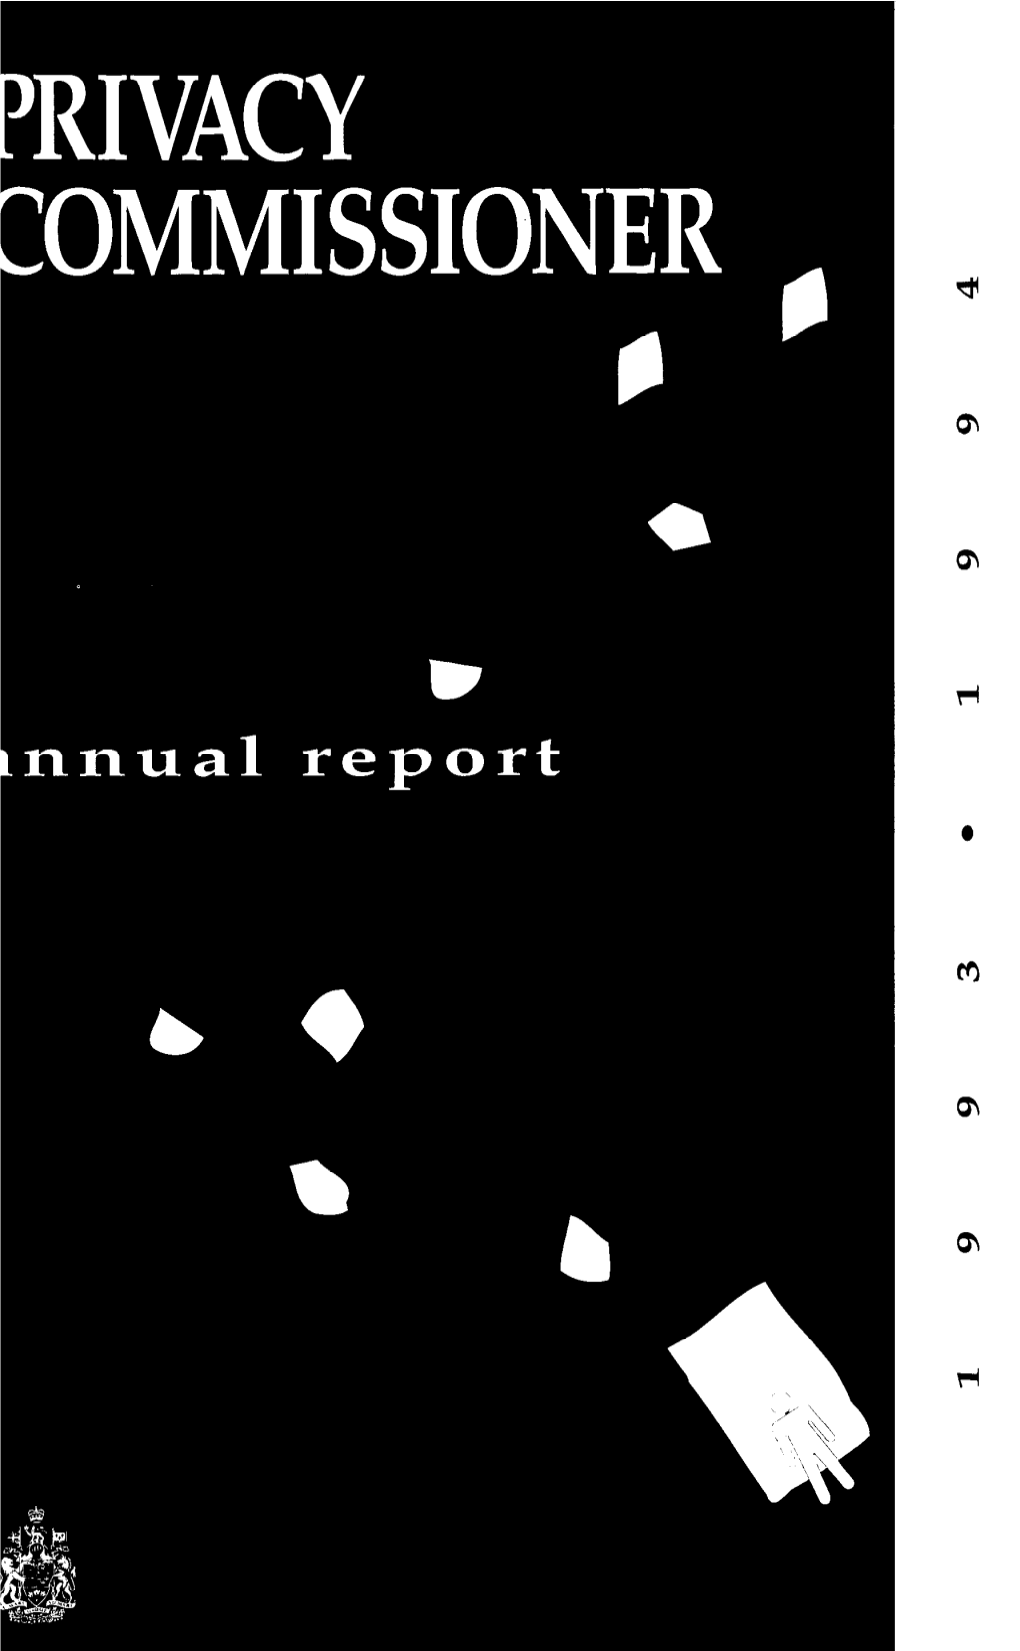 Annual Report Privacy Commissioner 1993-1994